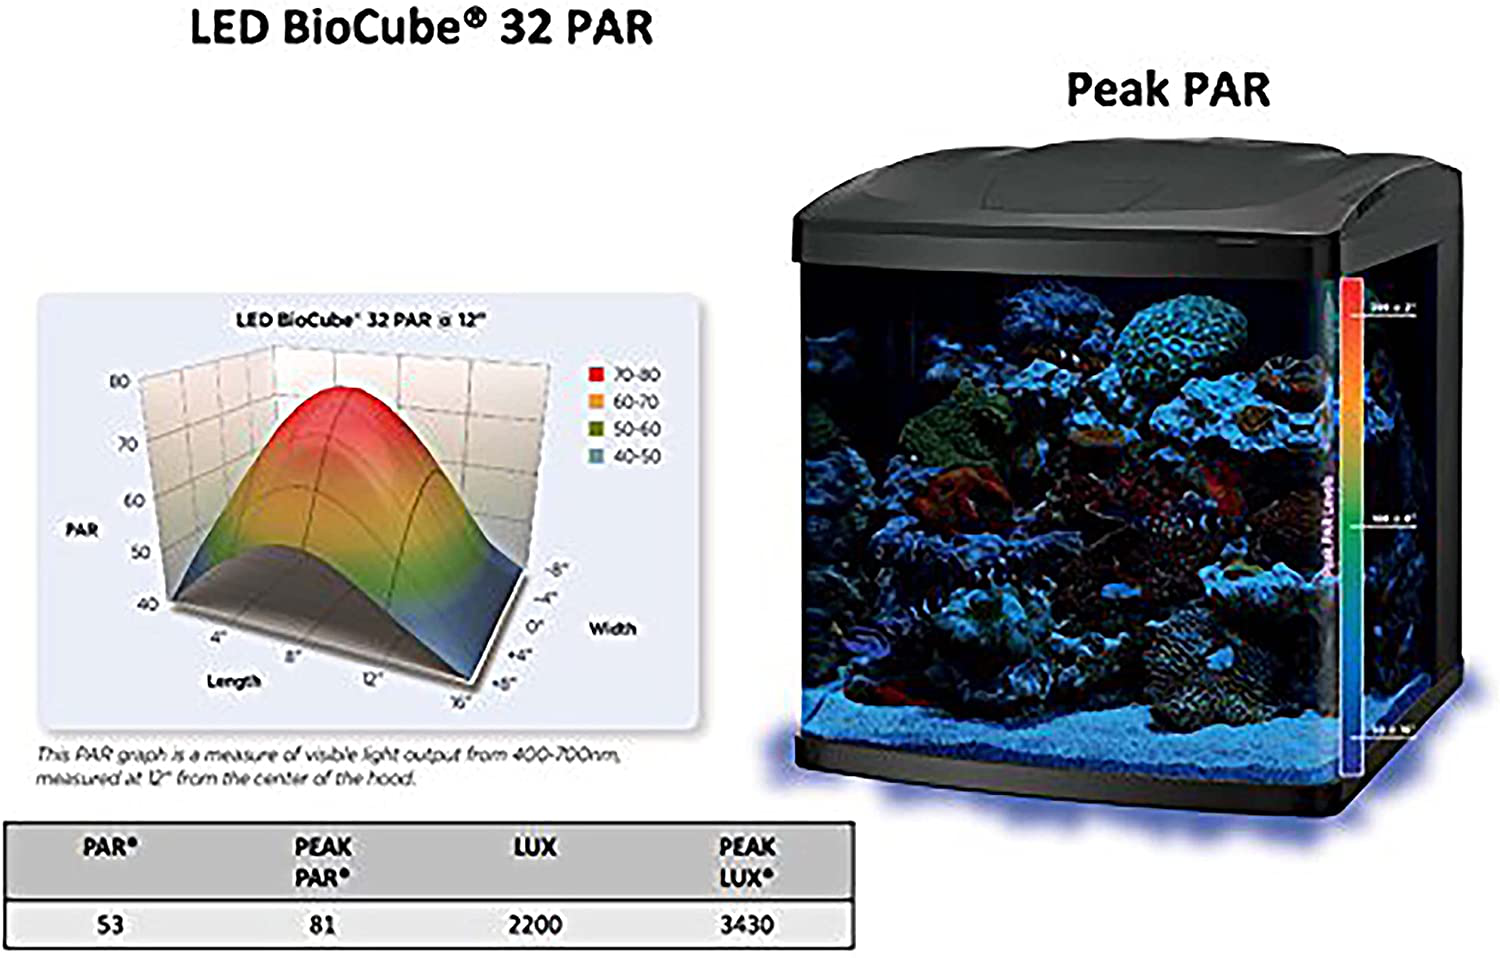 Coralife Biocube LED Canopy